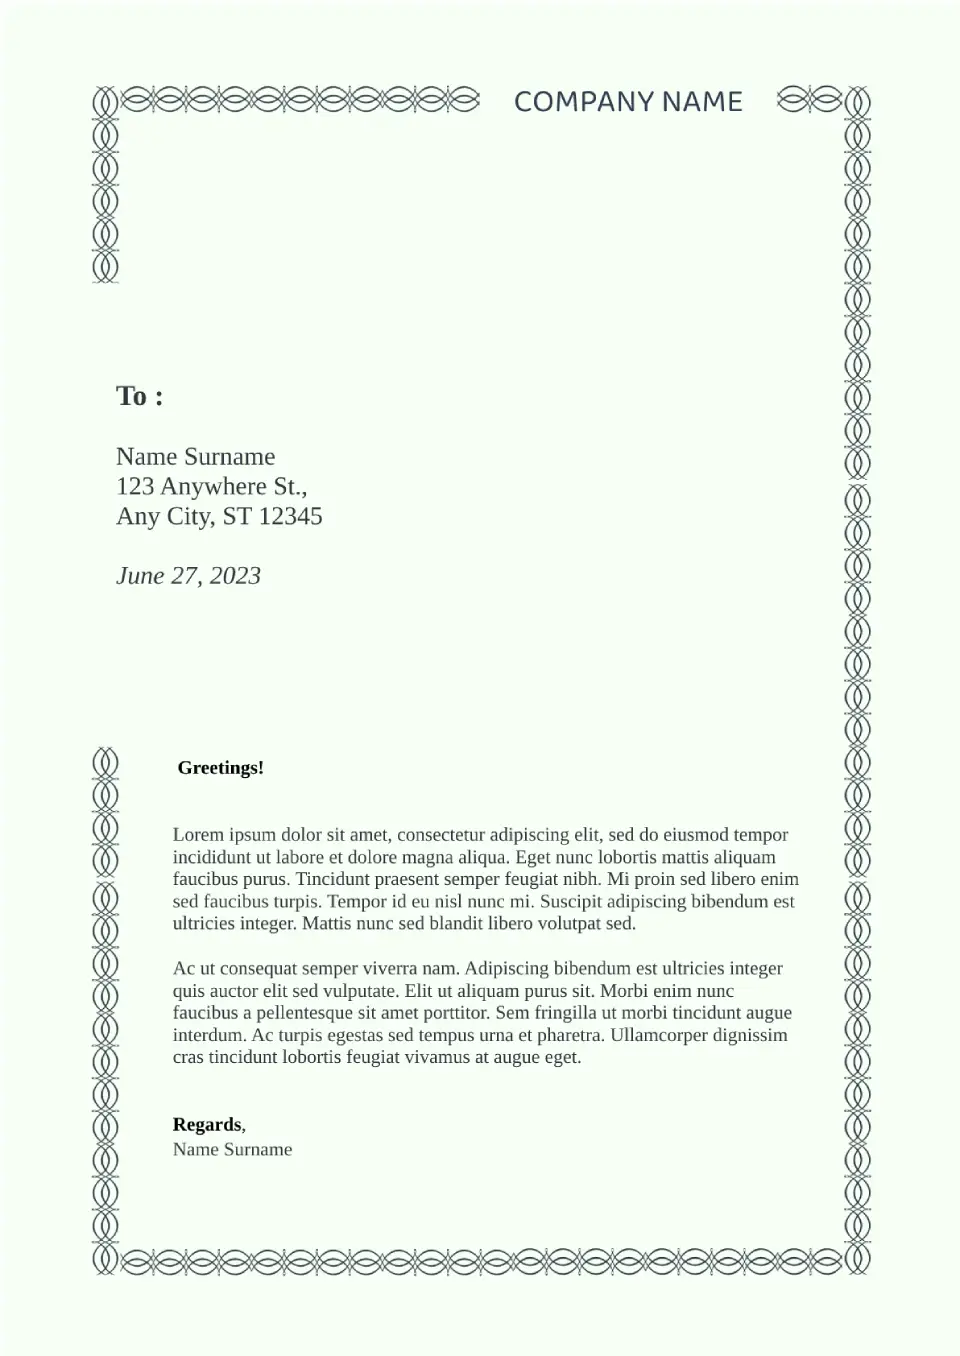 Formal Letter Template for Google Docs